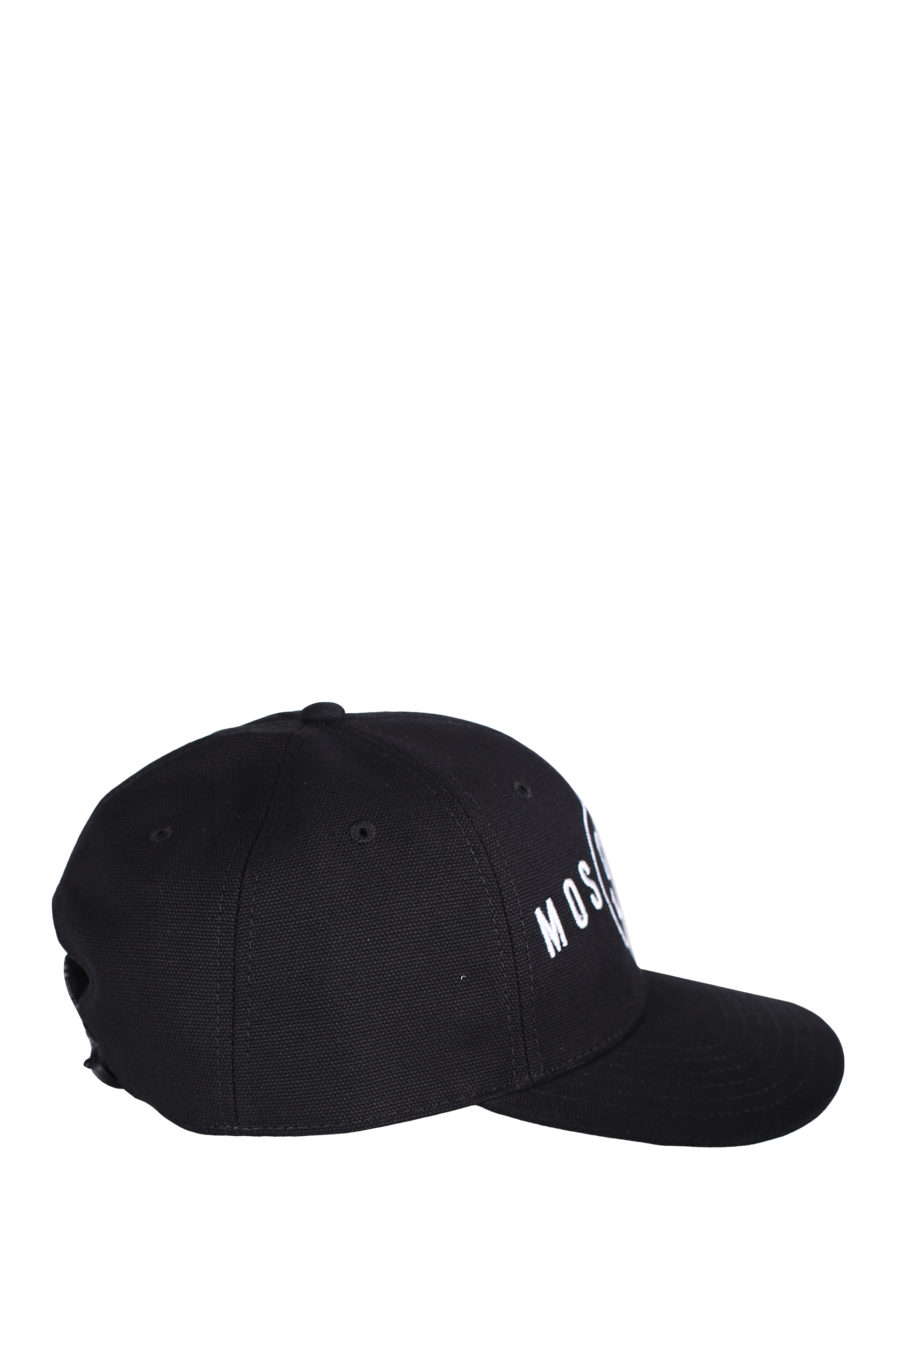 Black cap with "Smiley" logo - IMG 0807